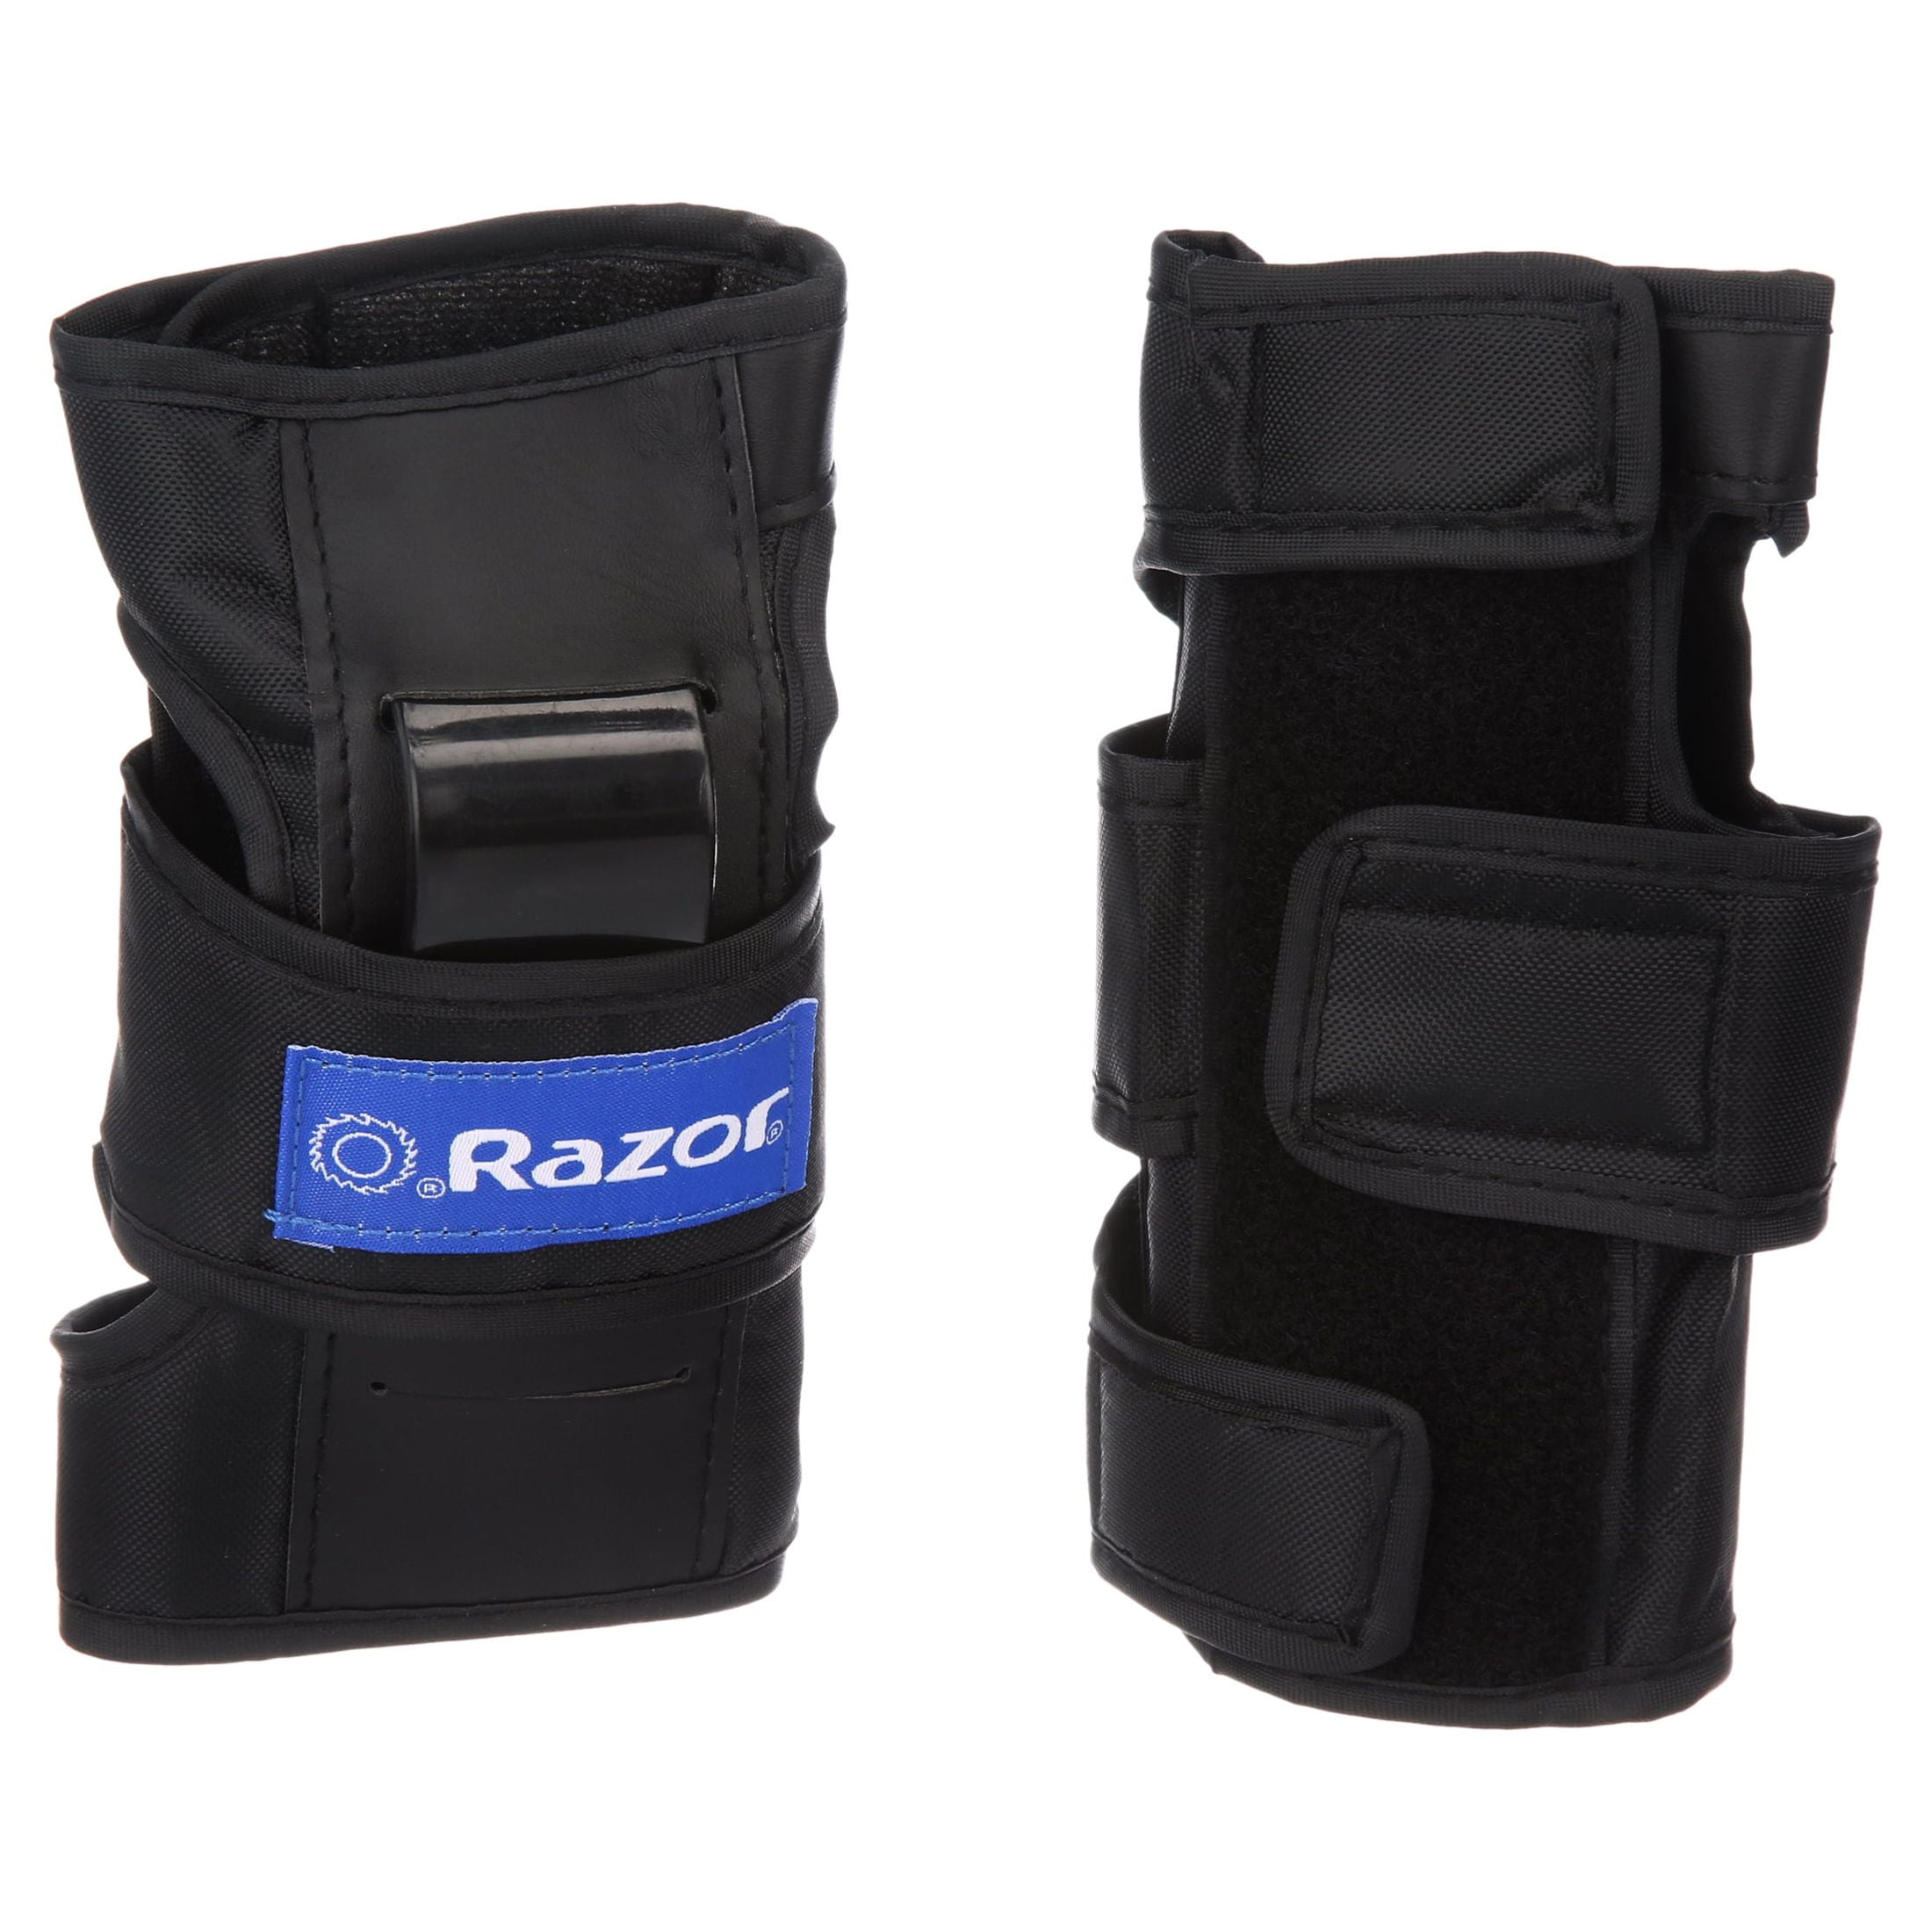 Razor Black Multi-Color Youth 8 Plus Adjustable Straps Vented Dual